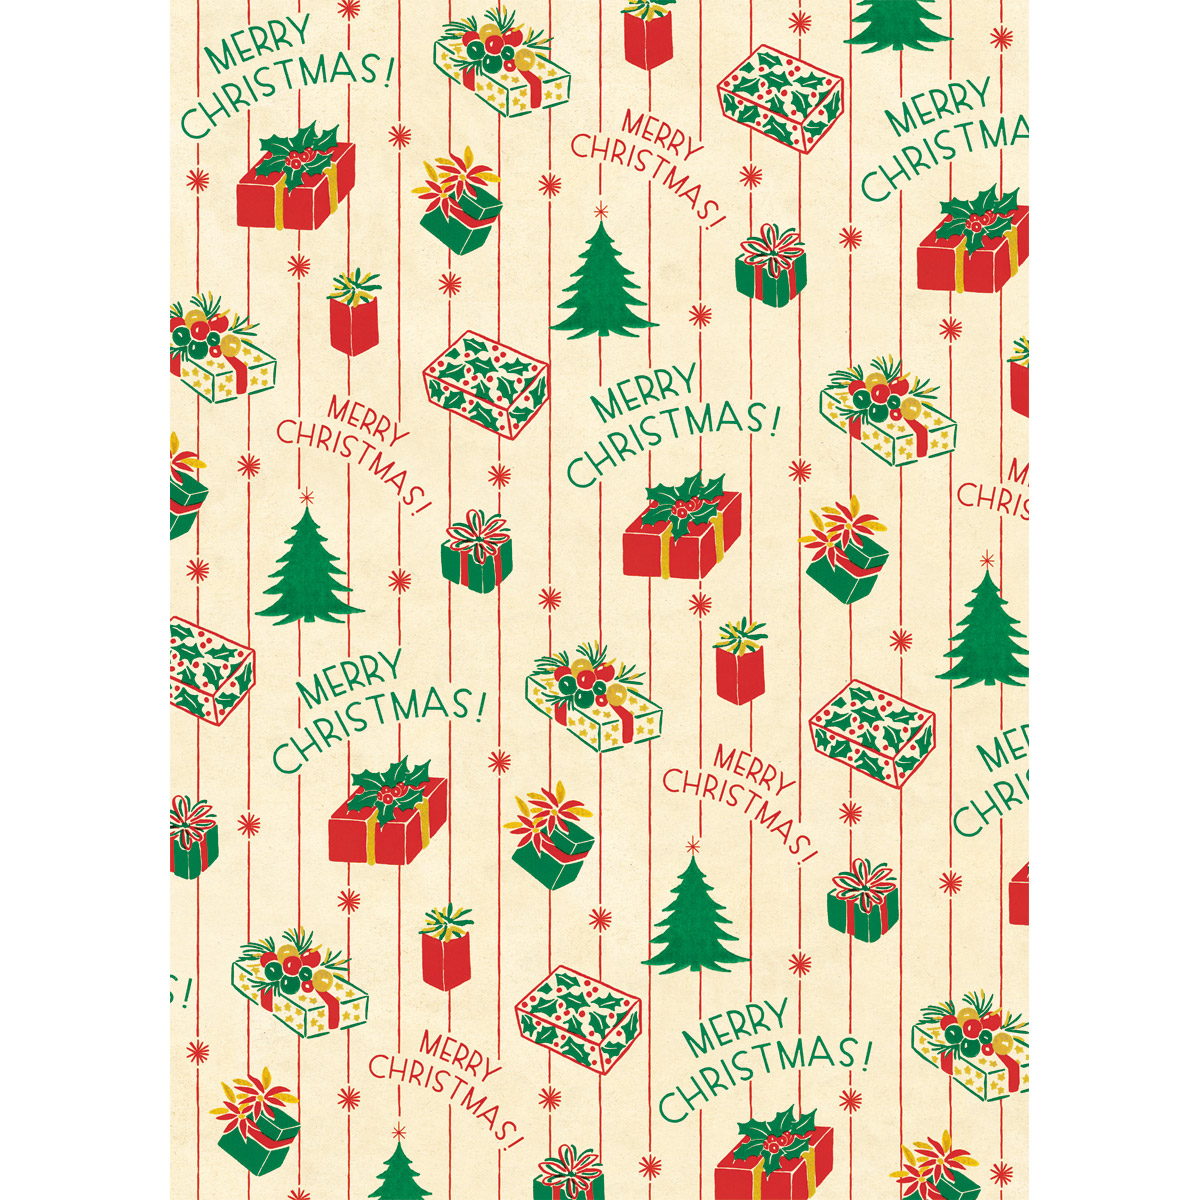 Retro Christmas Decoration Ads Crafting Mod Podge Gift Wrap